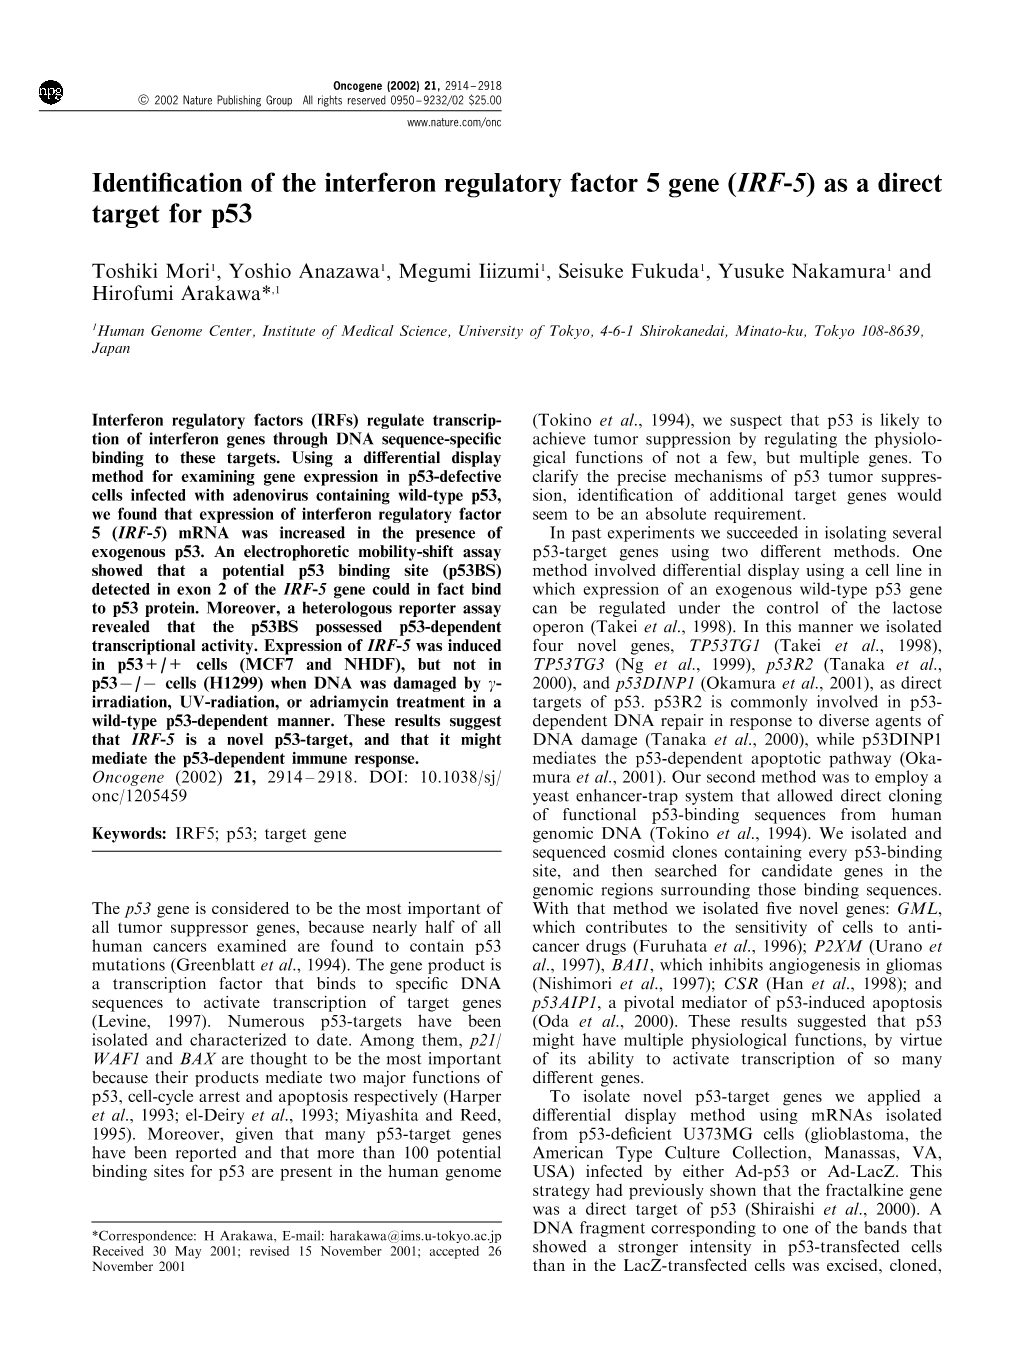 Identification of the Interferon Regulatory Factor 5 Gene (IRF-5)